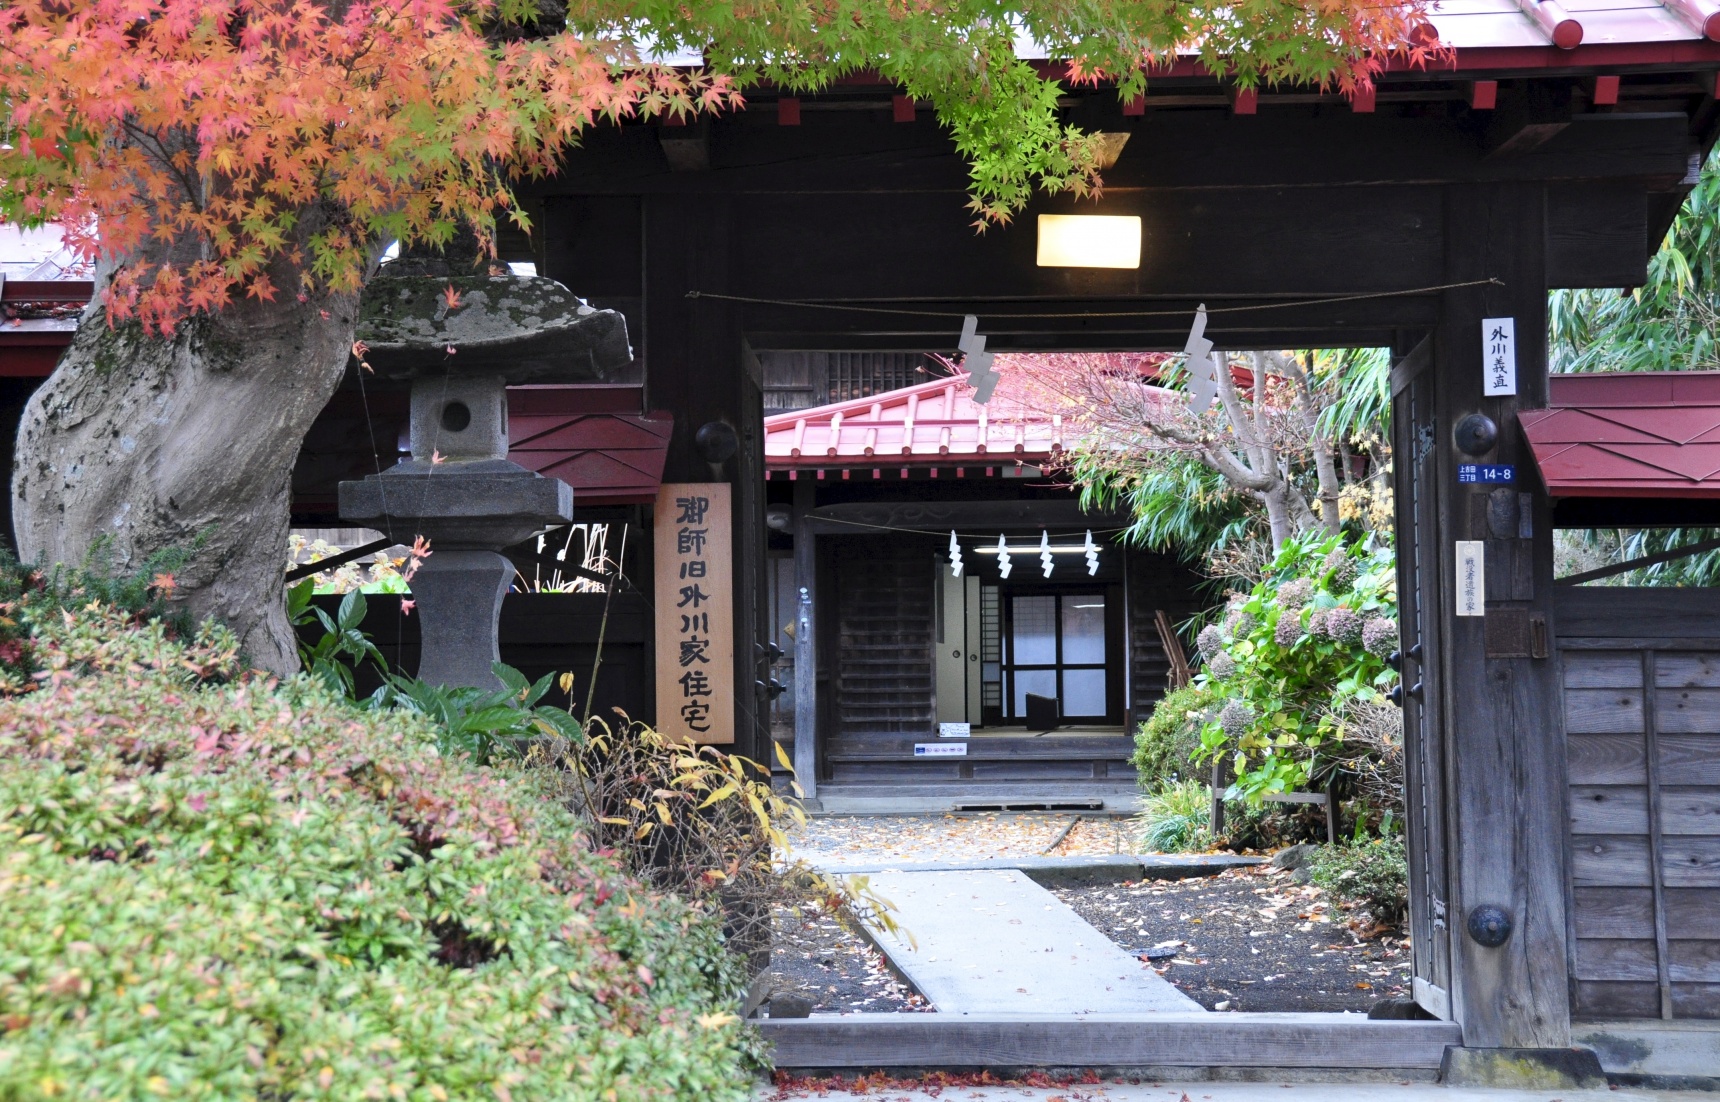 Togawa Oshi House: Lodging for Fuji Pilgrims